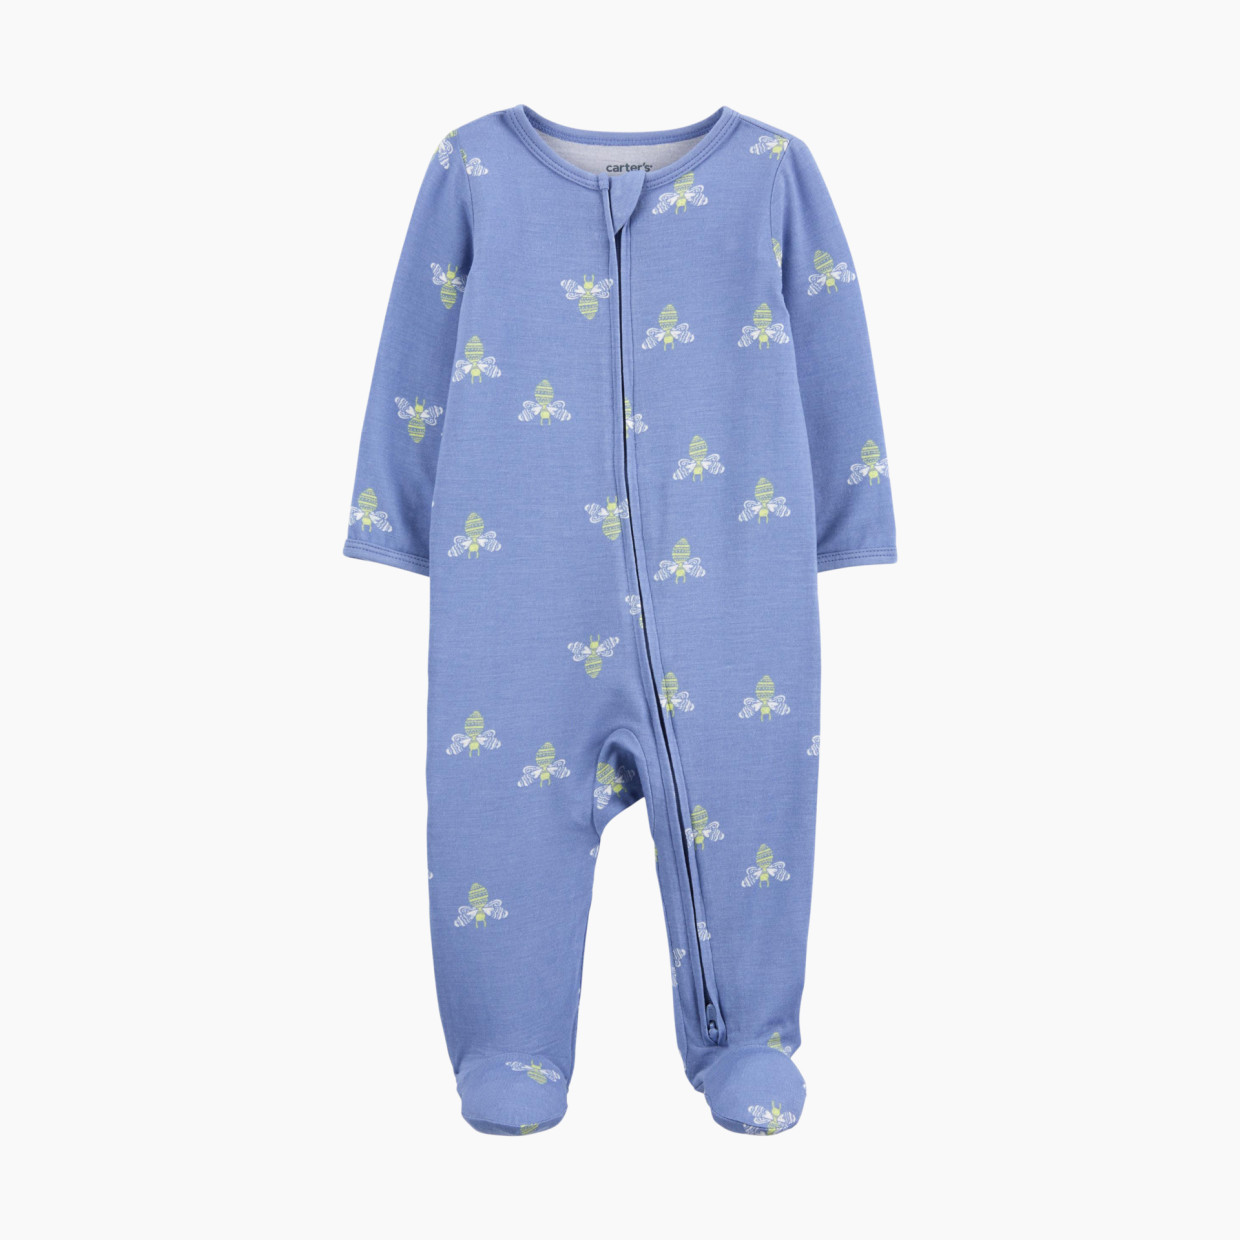 Carter's 2-Way Zip Lenzing Ecovera Sleep & Play Pajamas - Blue Bees, 6 M.